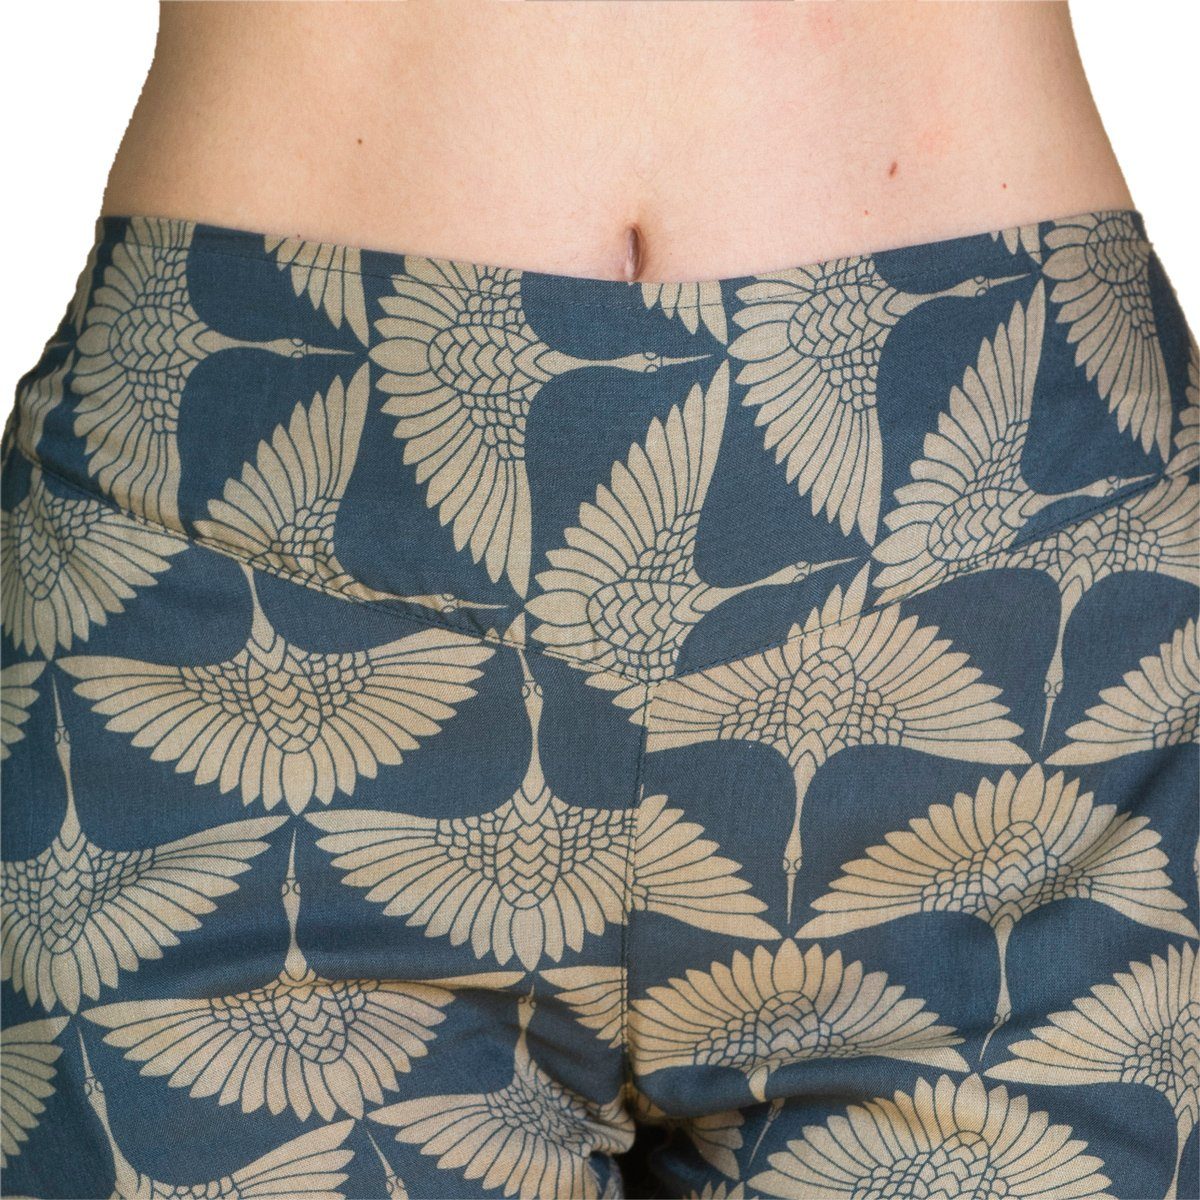 bequeme Pants Baumwolle Damenhose heiliger 100% japanischen Stoffhose oder Sommerhose Mustern bedruckt mit Crane aus Carrot petrol geometrix Geometrie PANASIAM